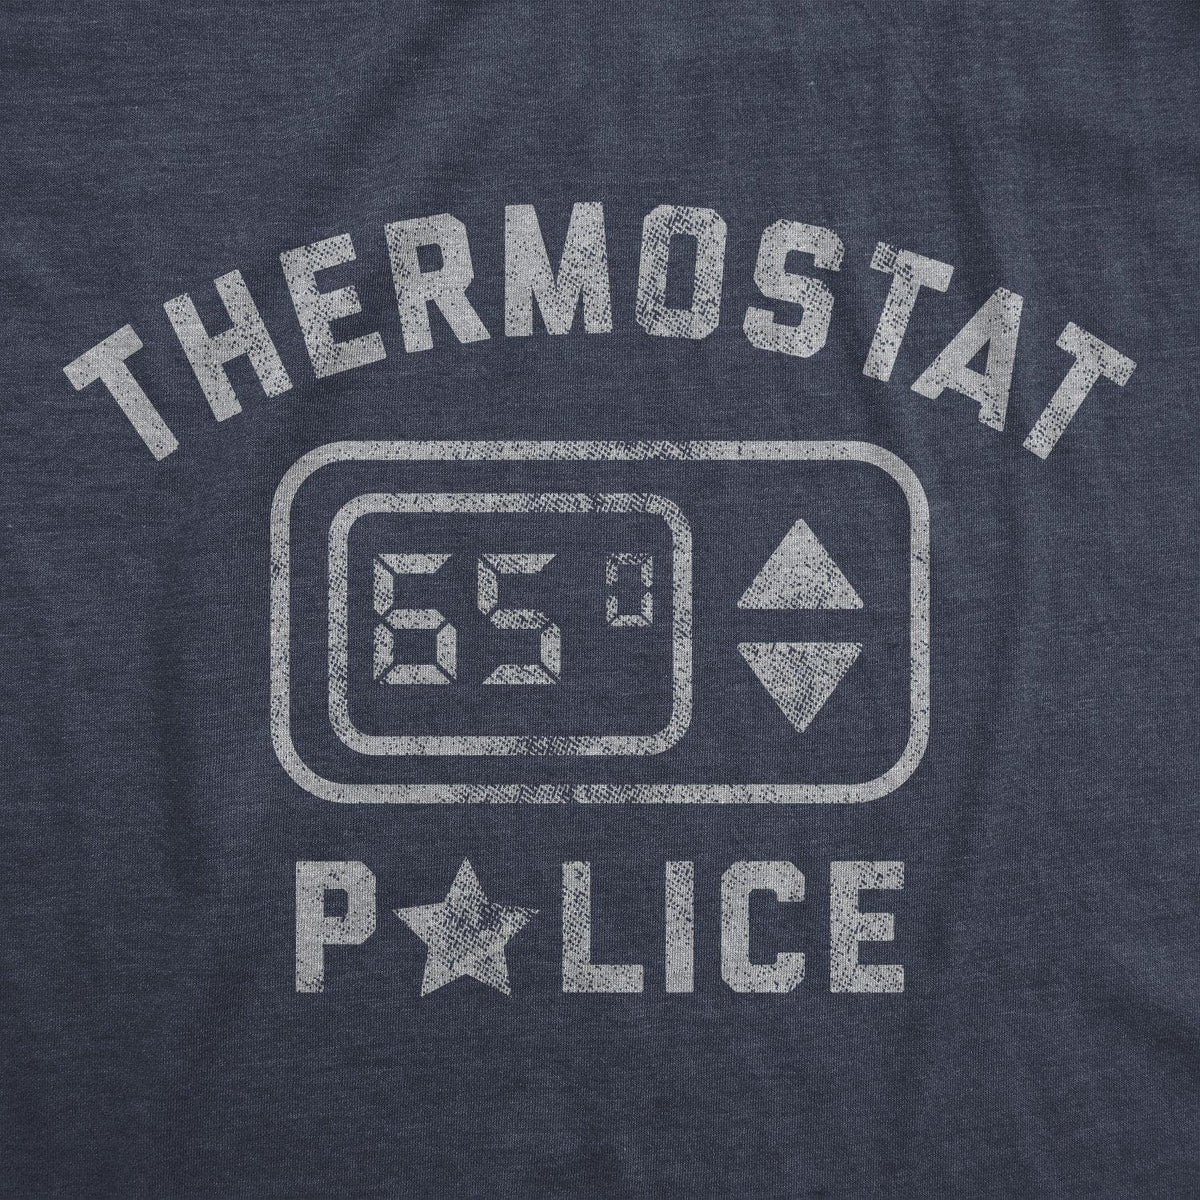 Thermostat Police Men&#39;s Tshirt - Crazy Dog T-Shirts